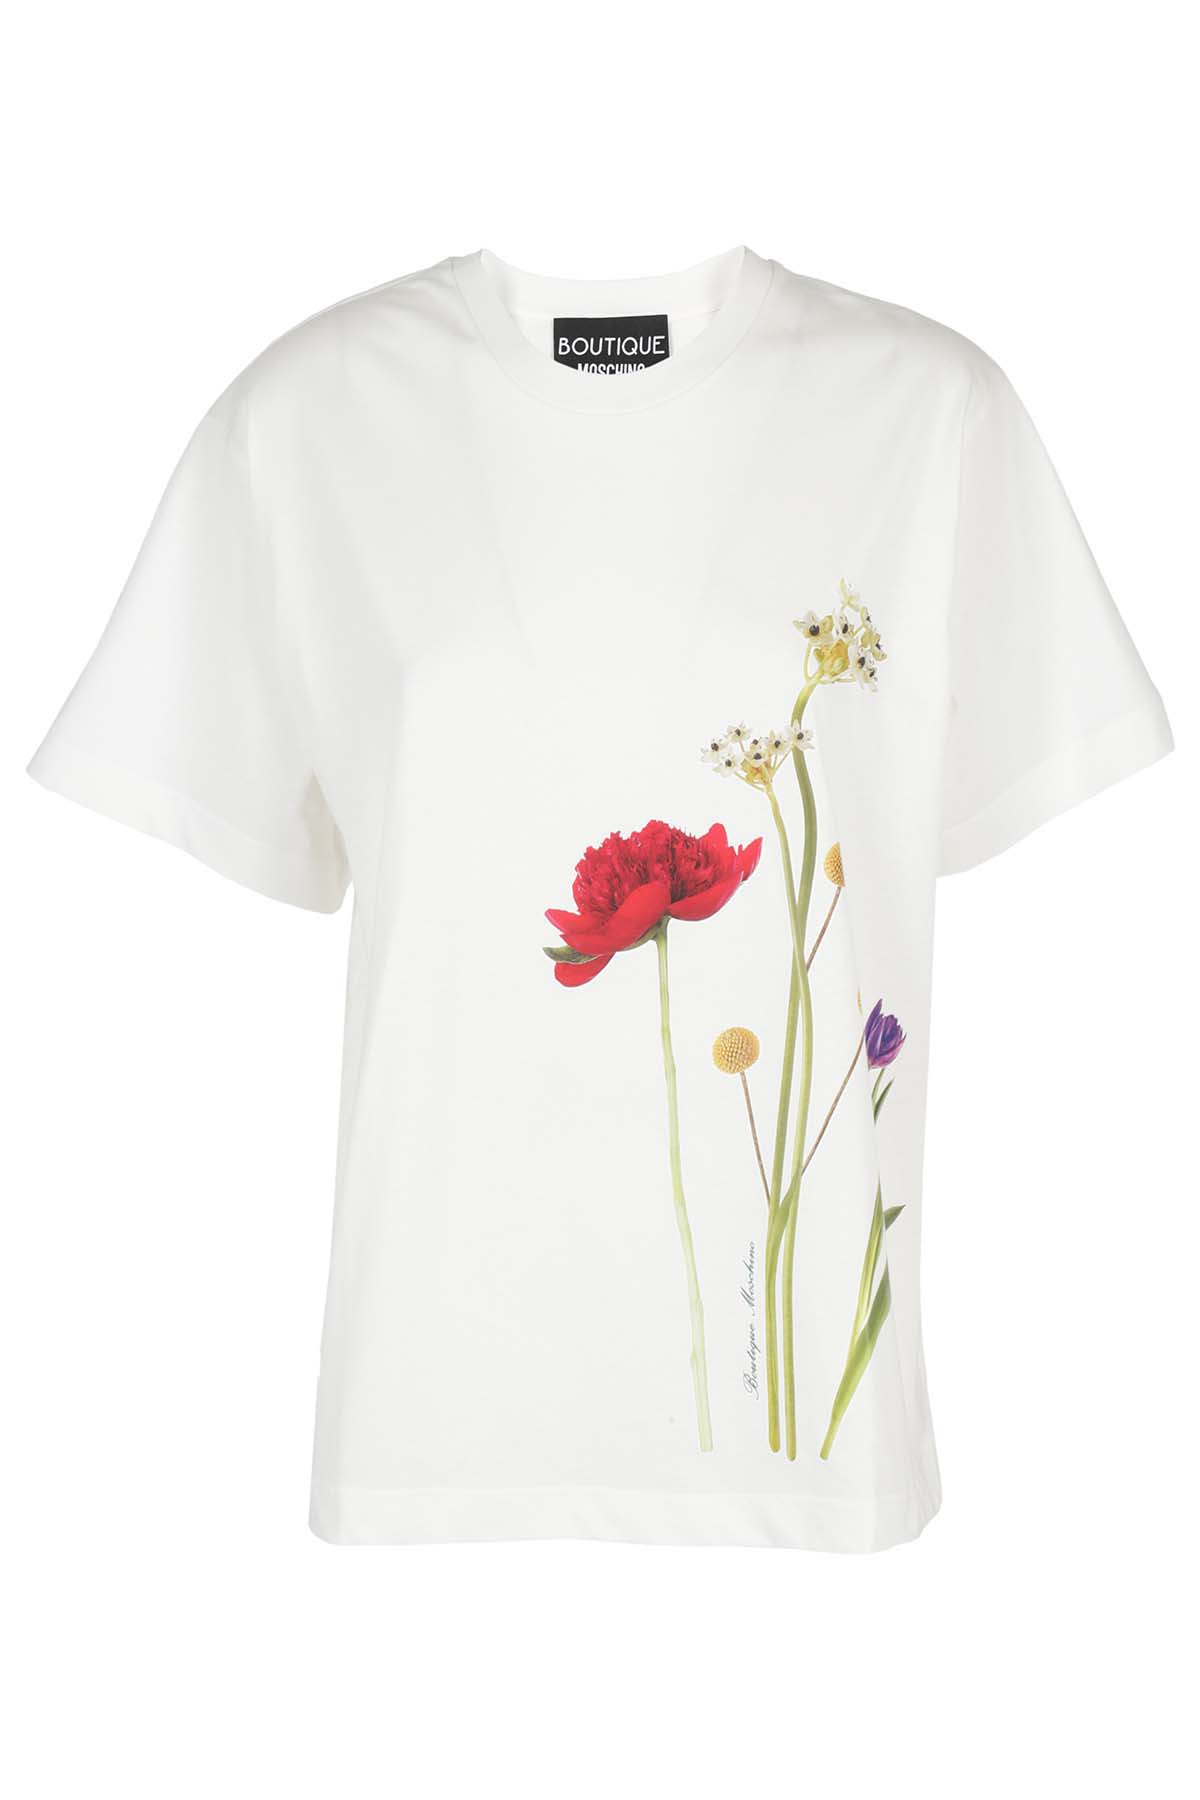 Boutique Moschino Rose Print T-shirt